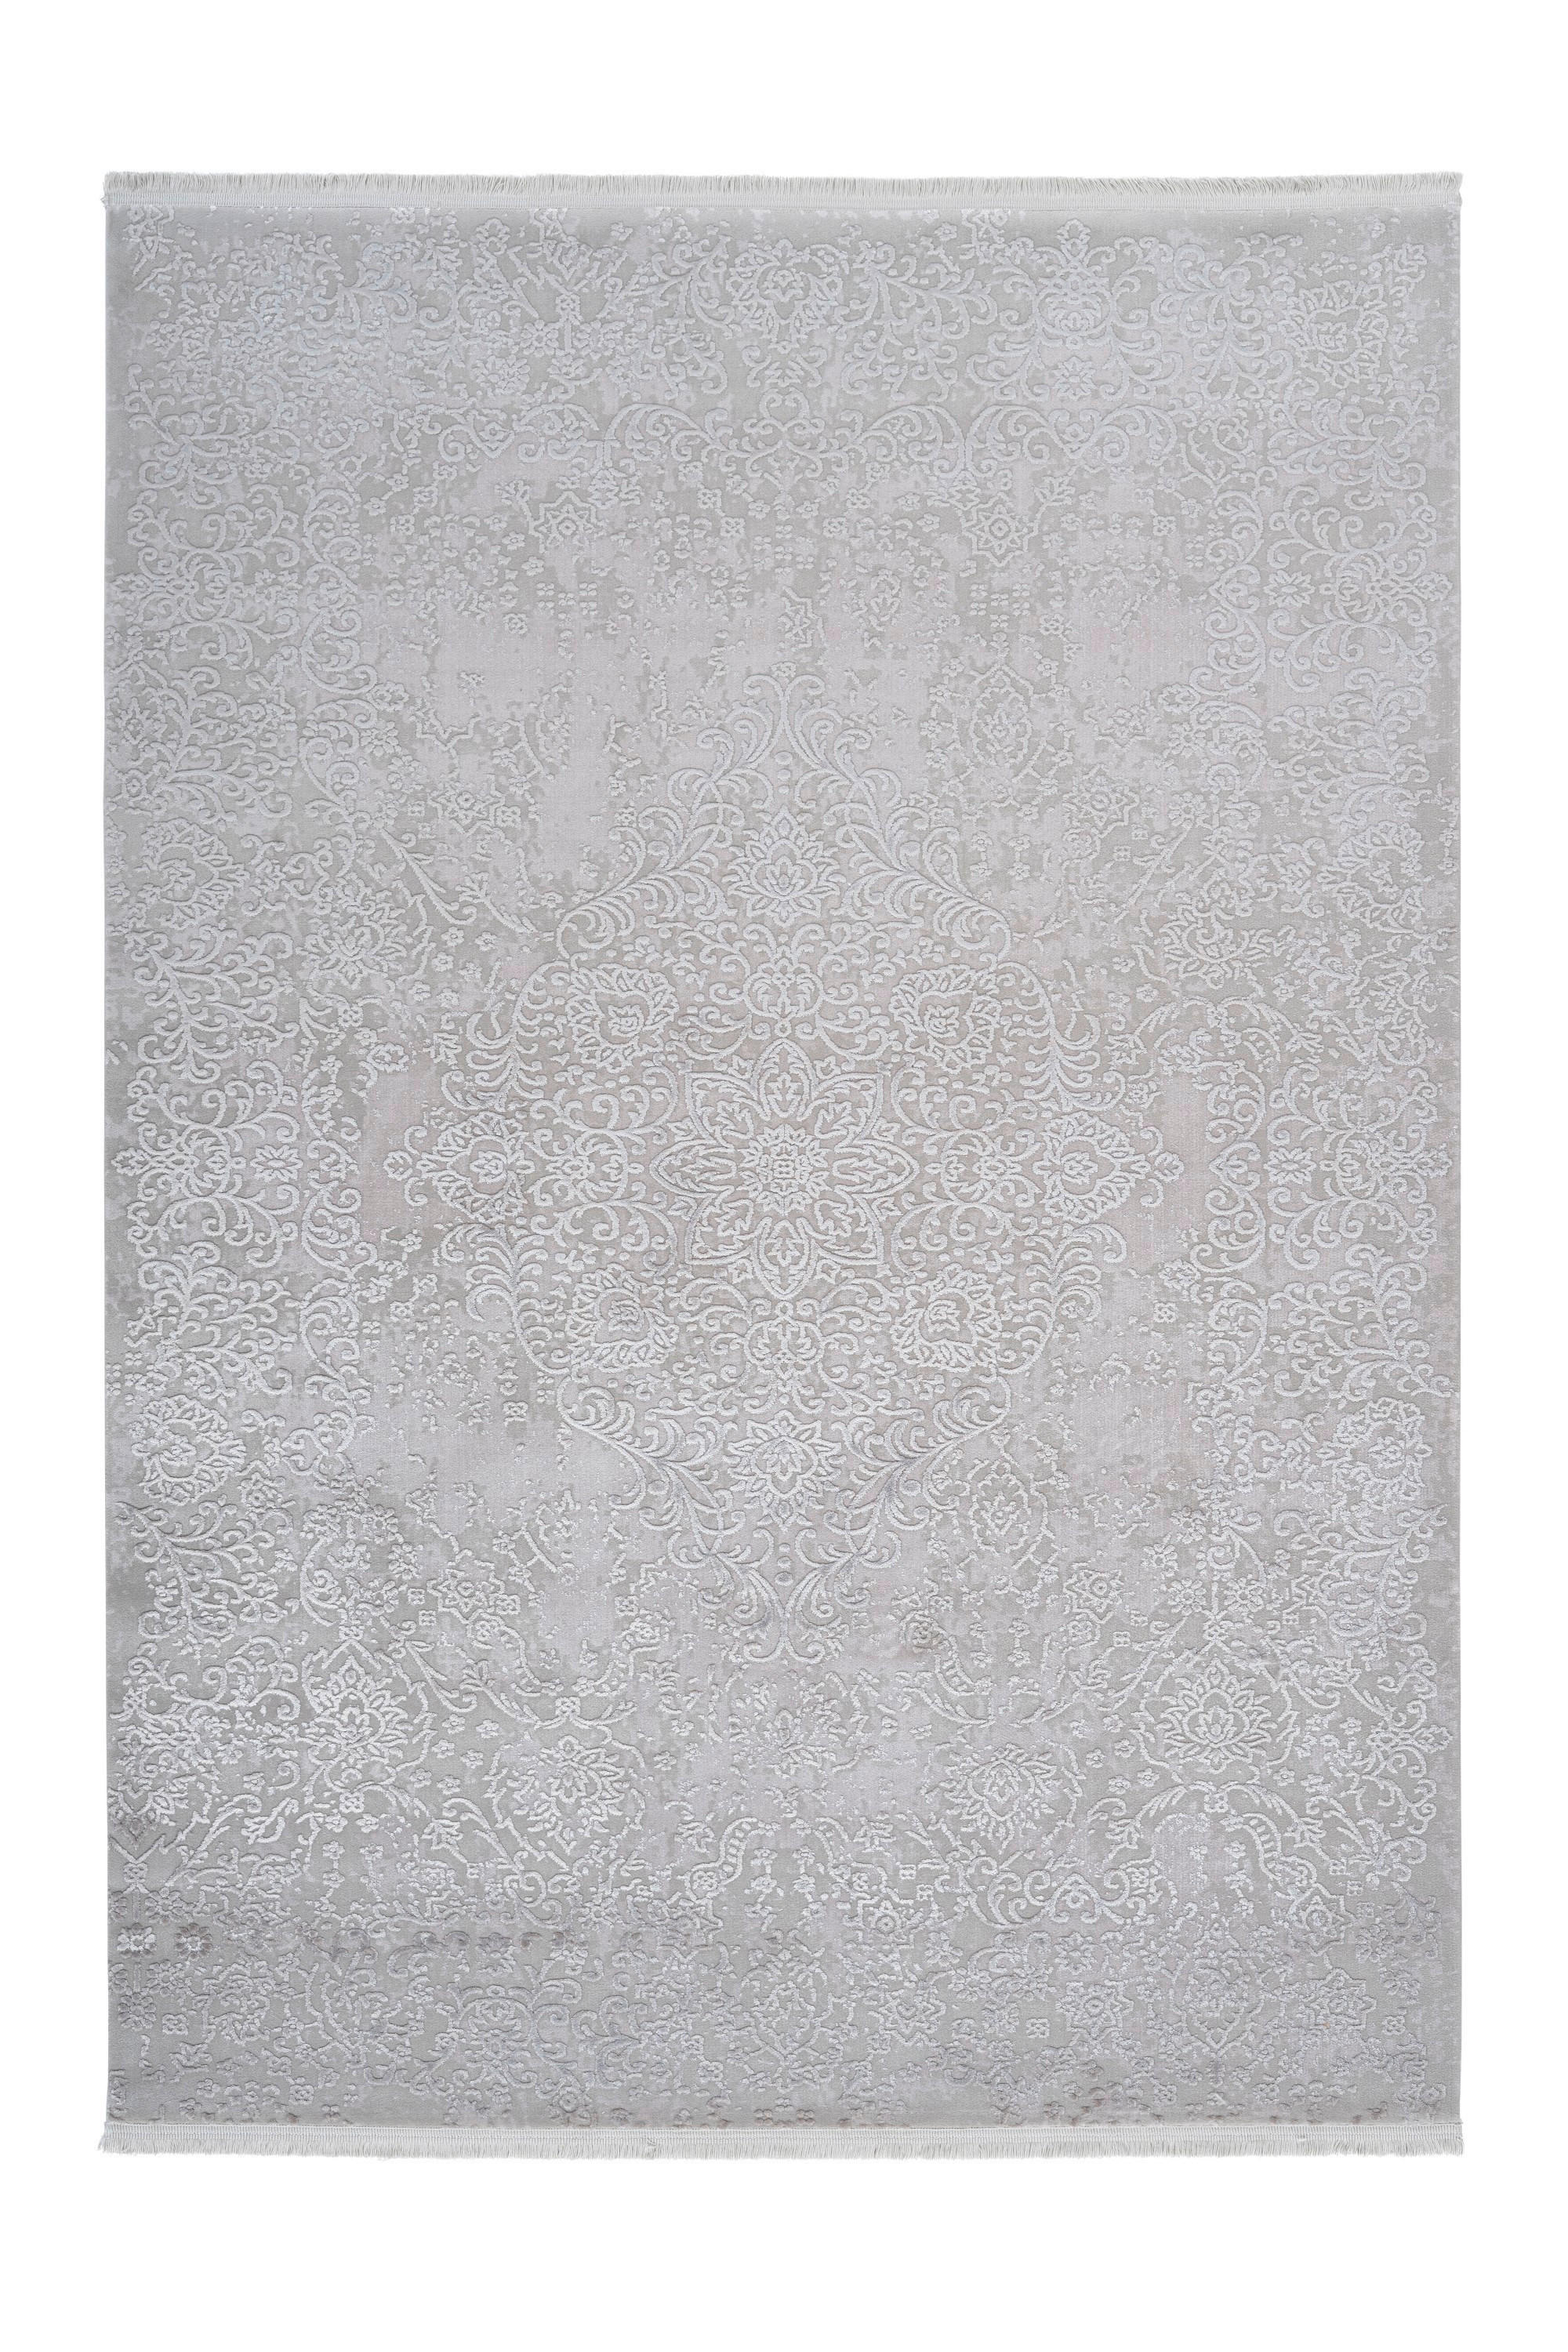 Levně Pierre Cardin TKANÝ KOBEREC, 200/290 cm, barvy stříbra